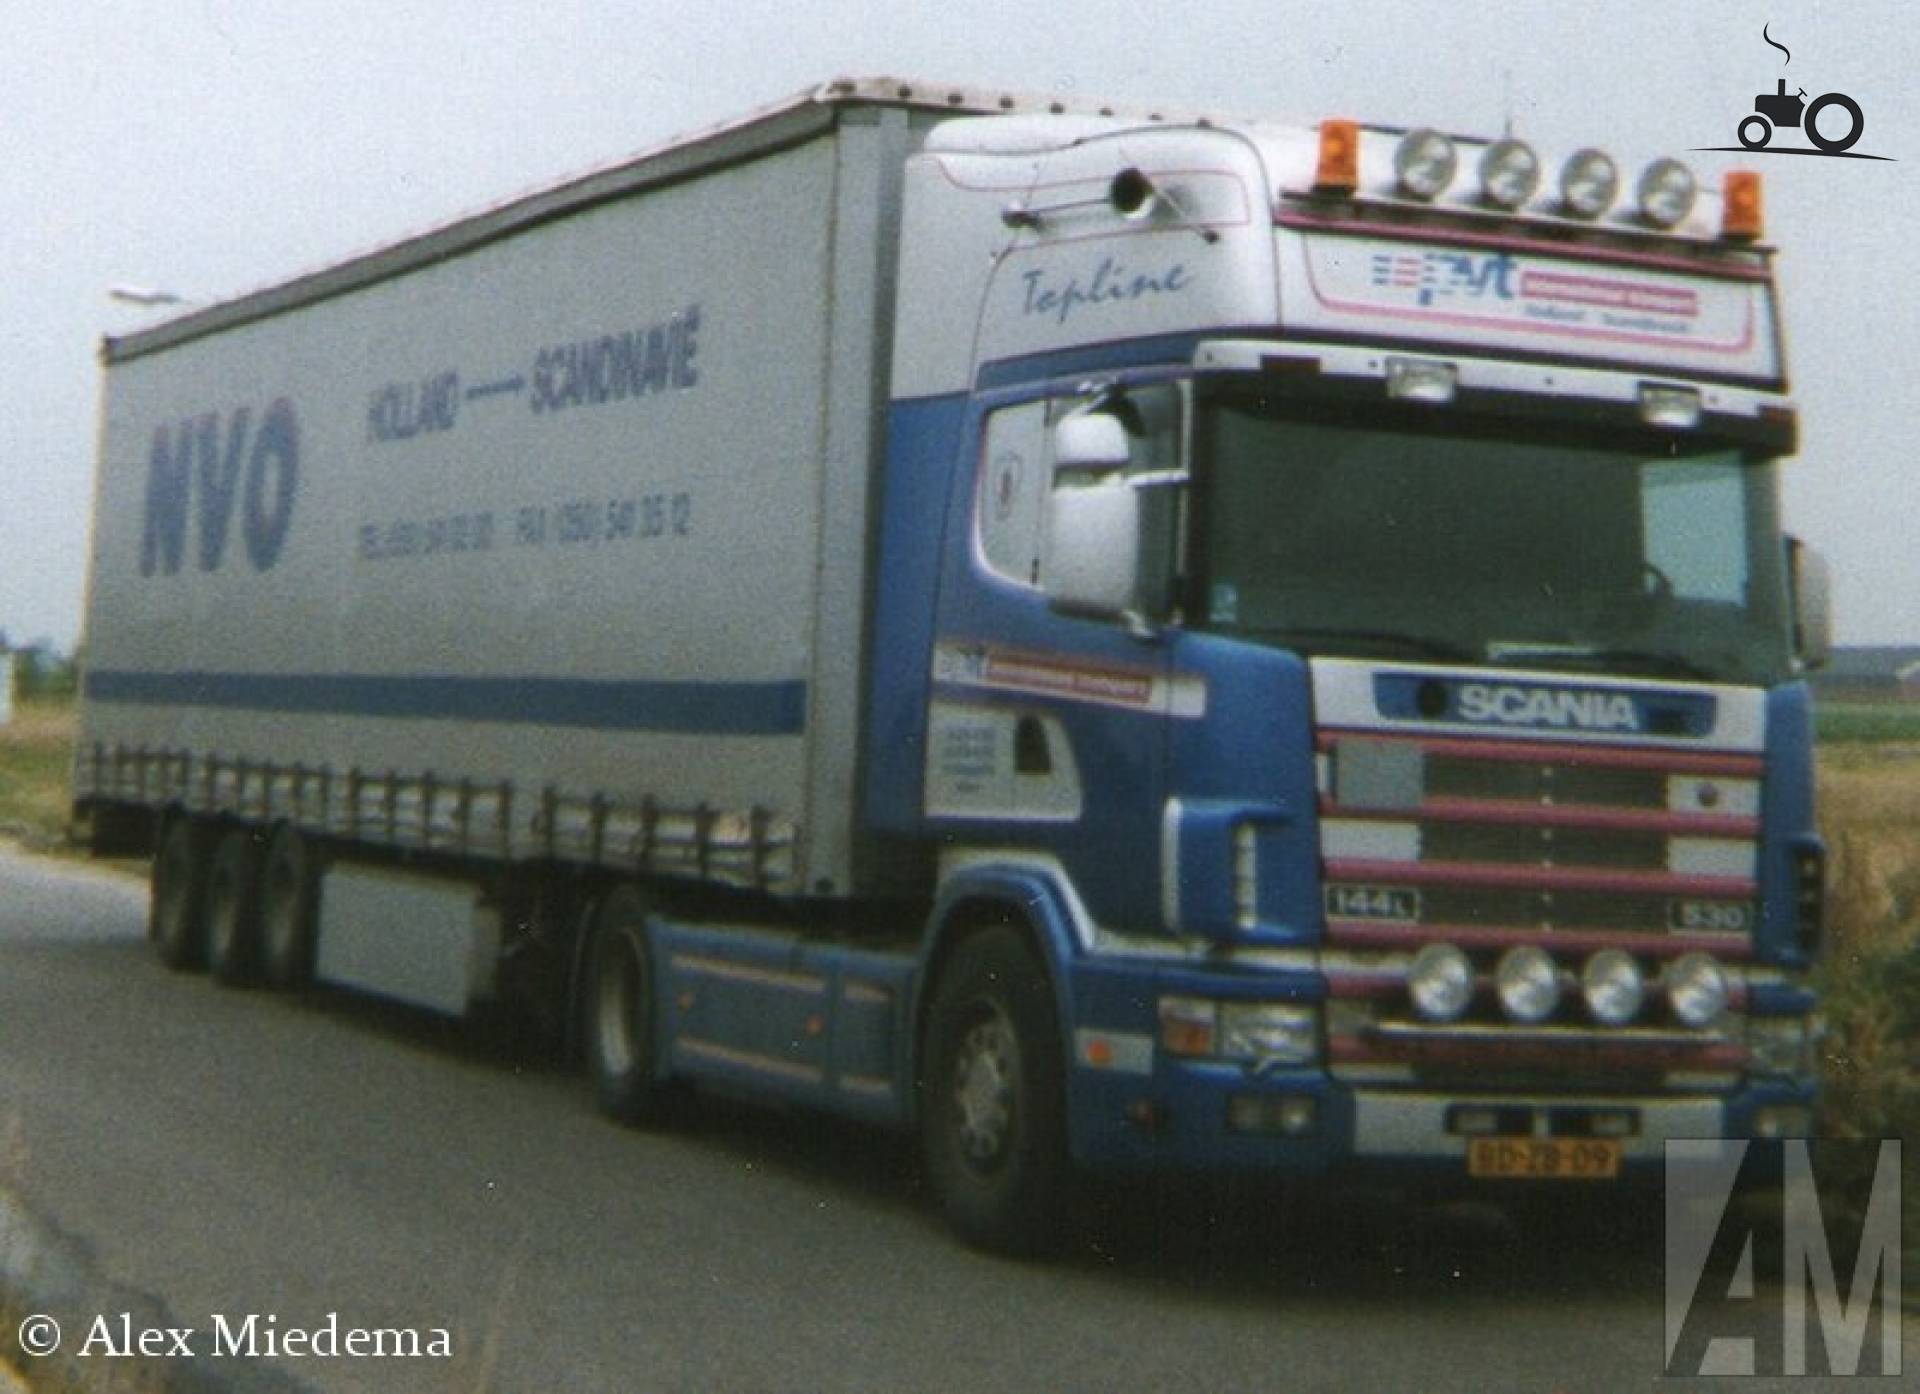 Scania 144